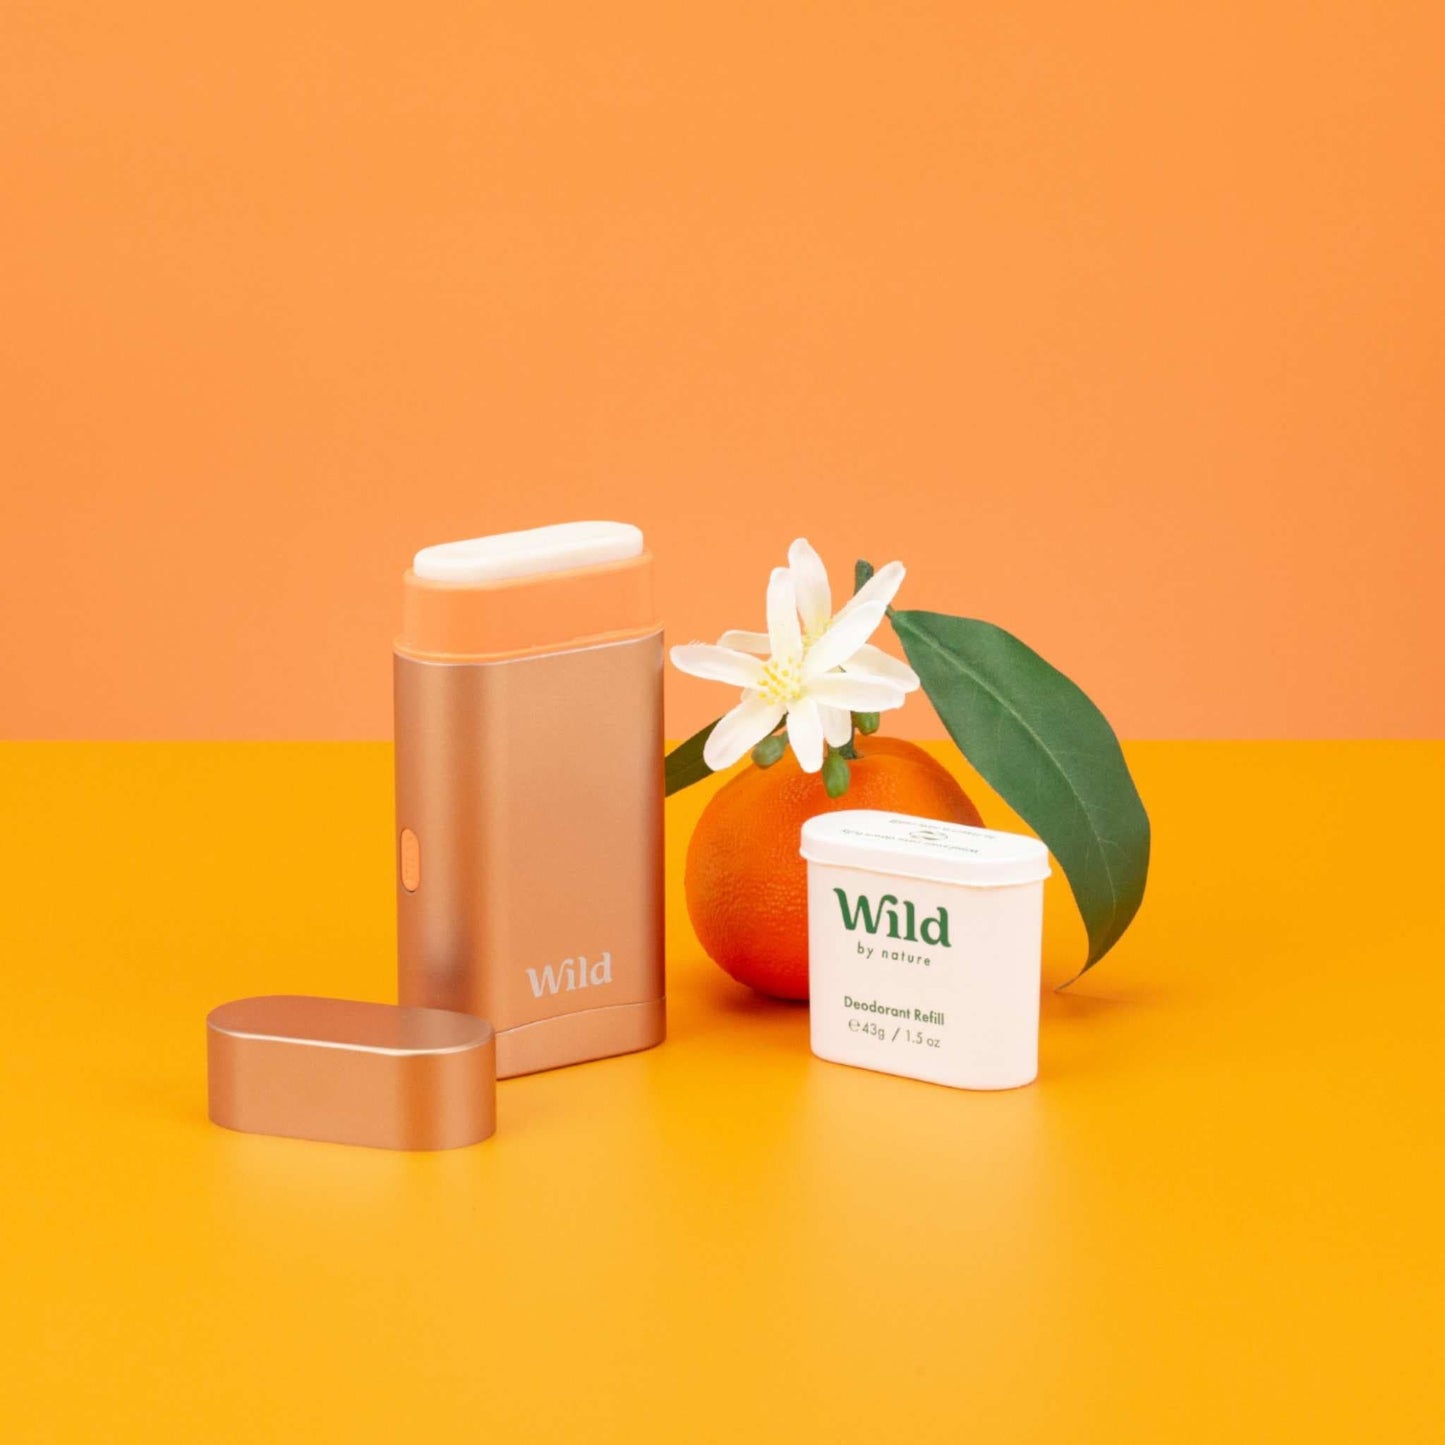 Wild Deodorant Wild Coral Case and Orange & Neroli Natural Deodorant Starter Pack 40g